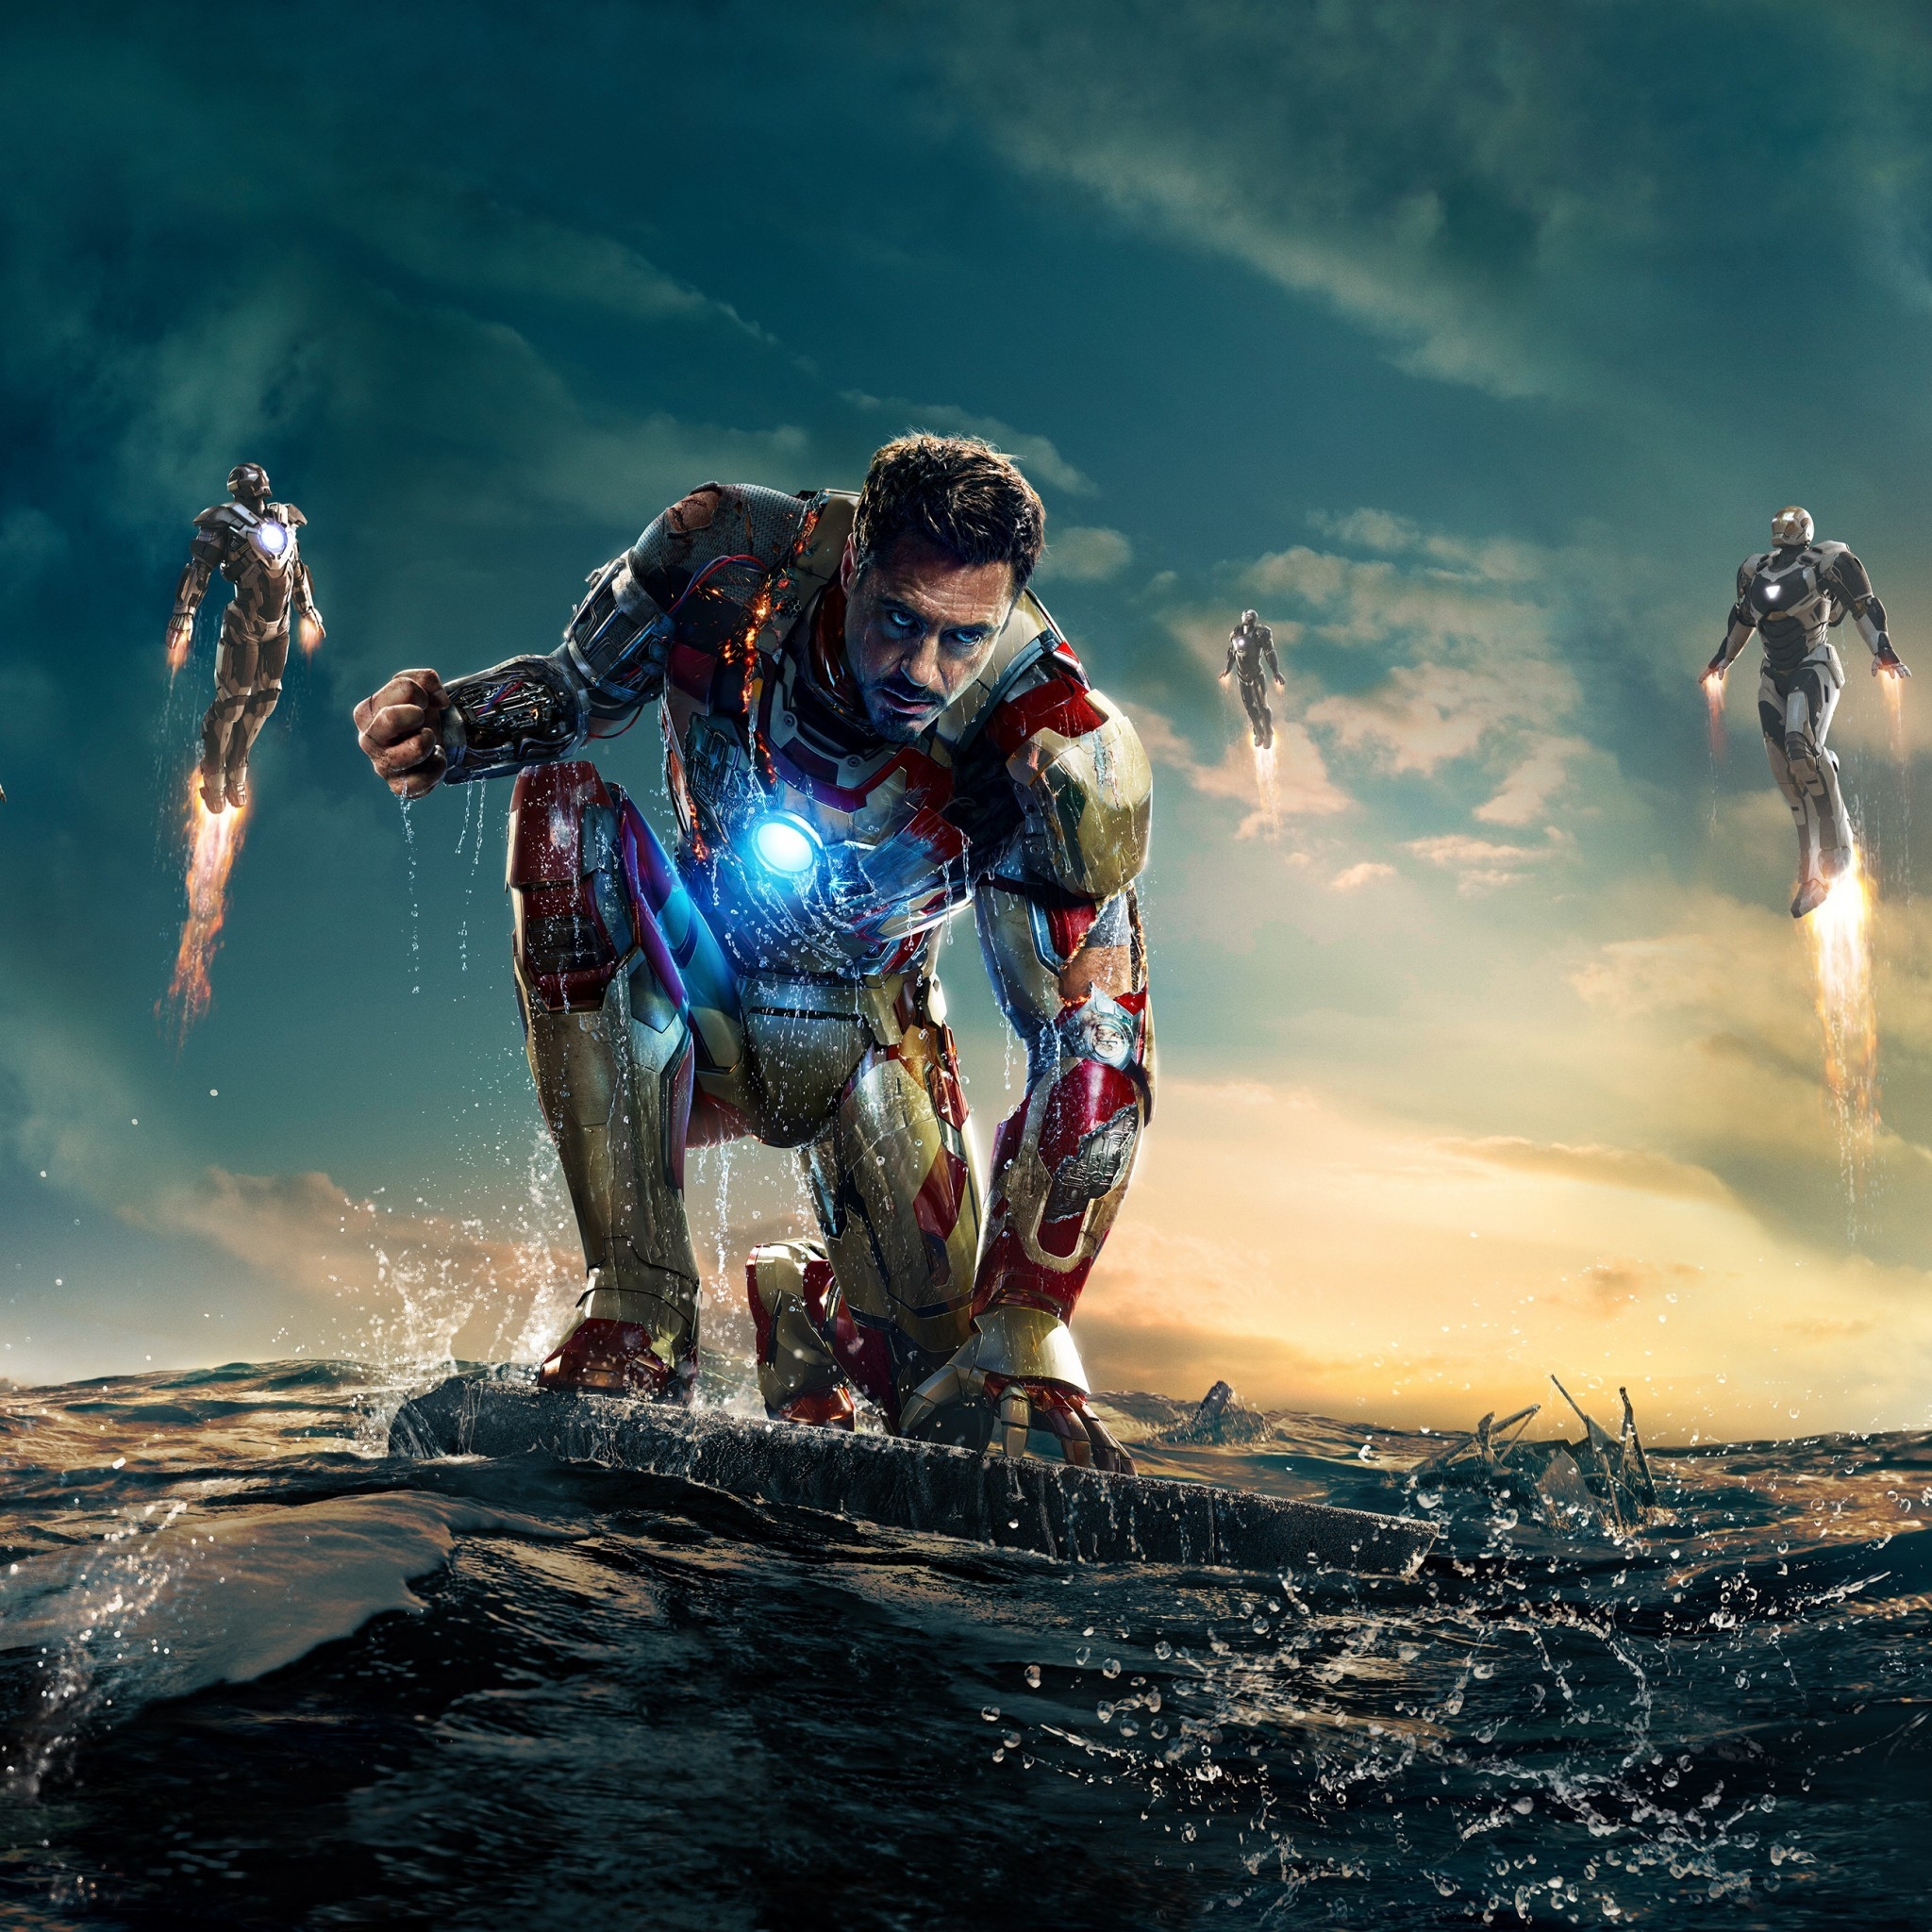 Iron Man 3 Robert Downey Jr for 2048 x 2048 New iPad resolution